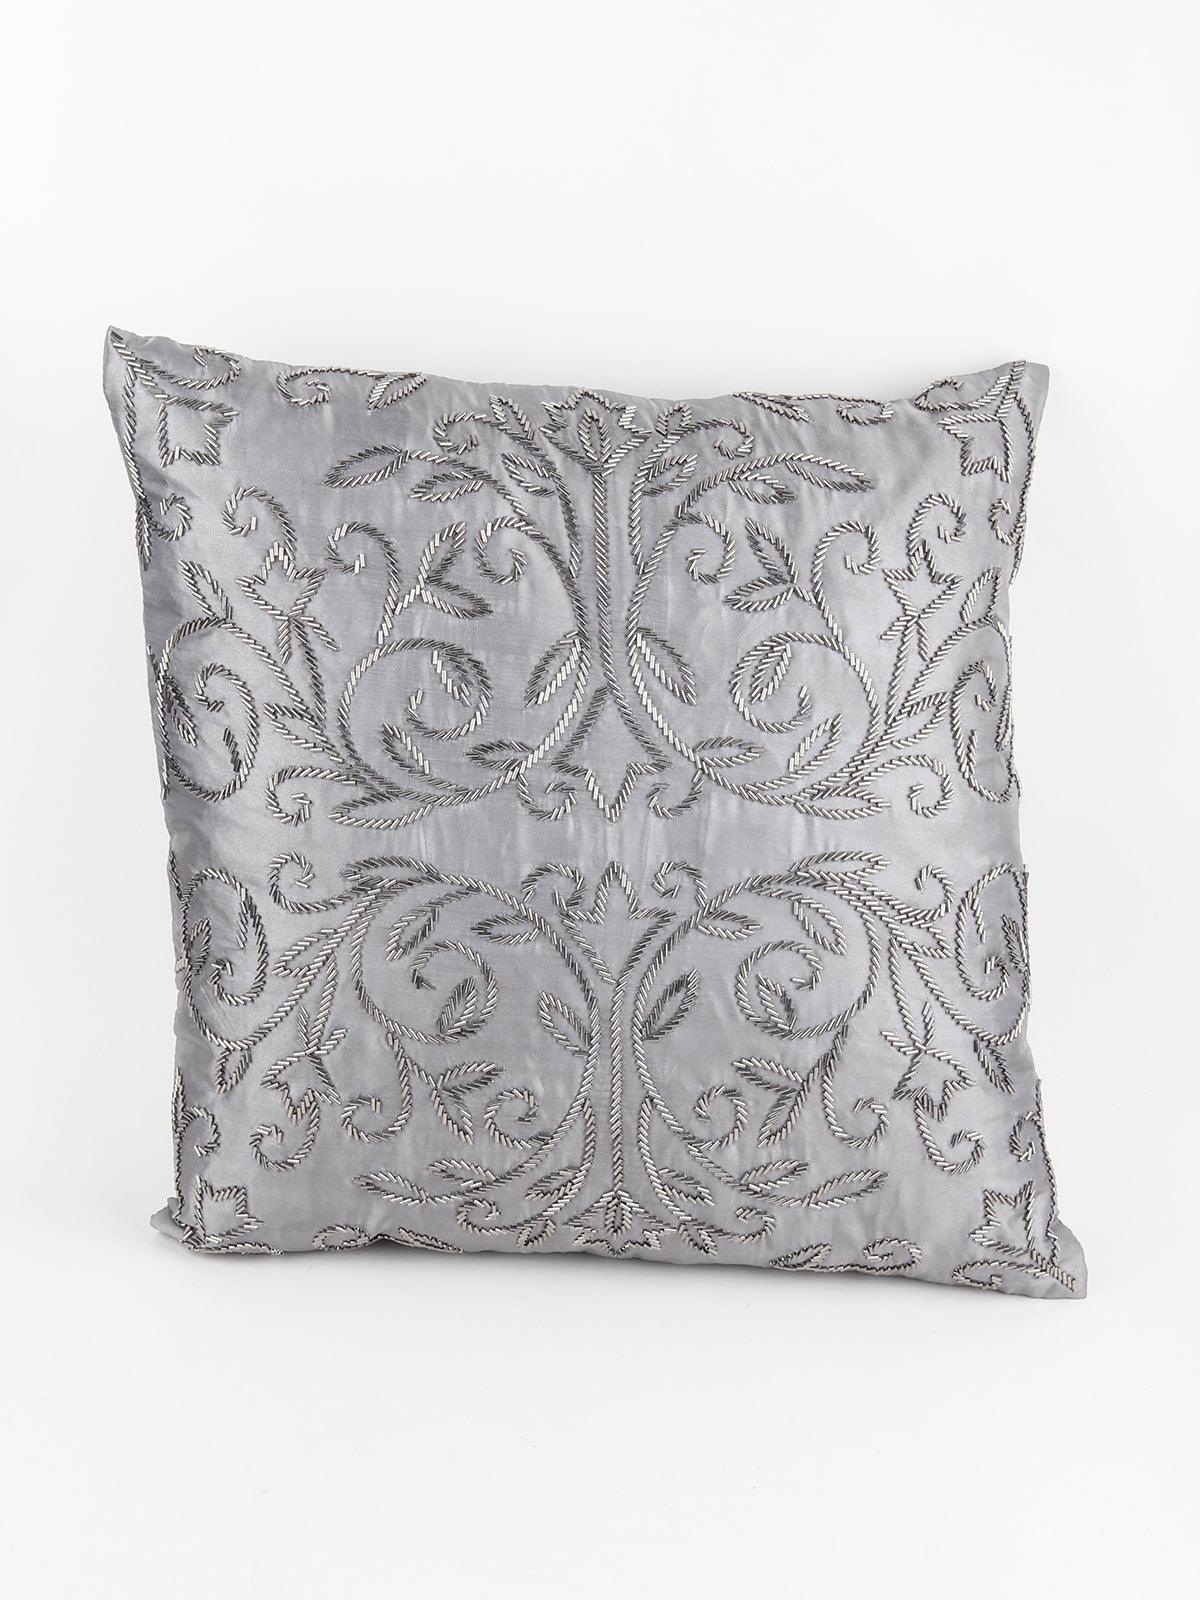 Handmade Grey Floral Embroidered Cushion - Odette